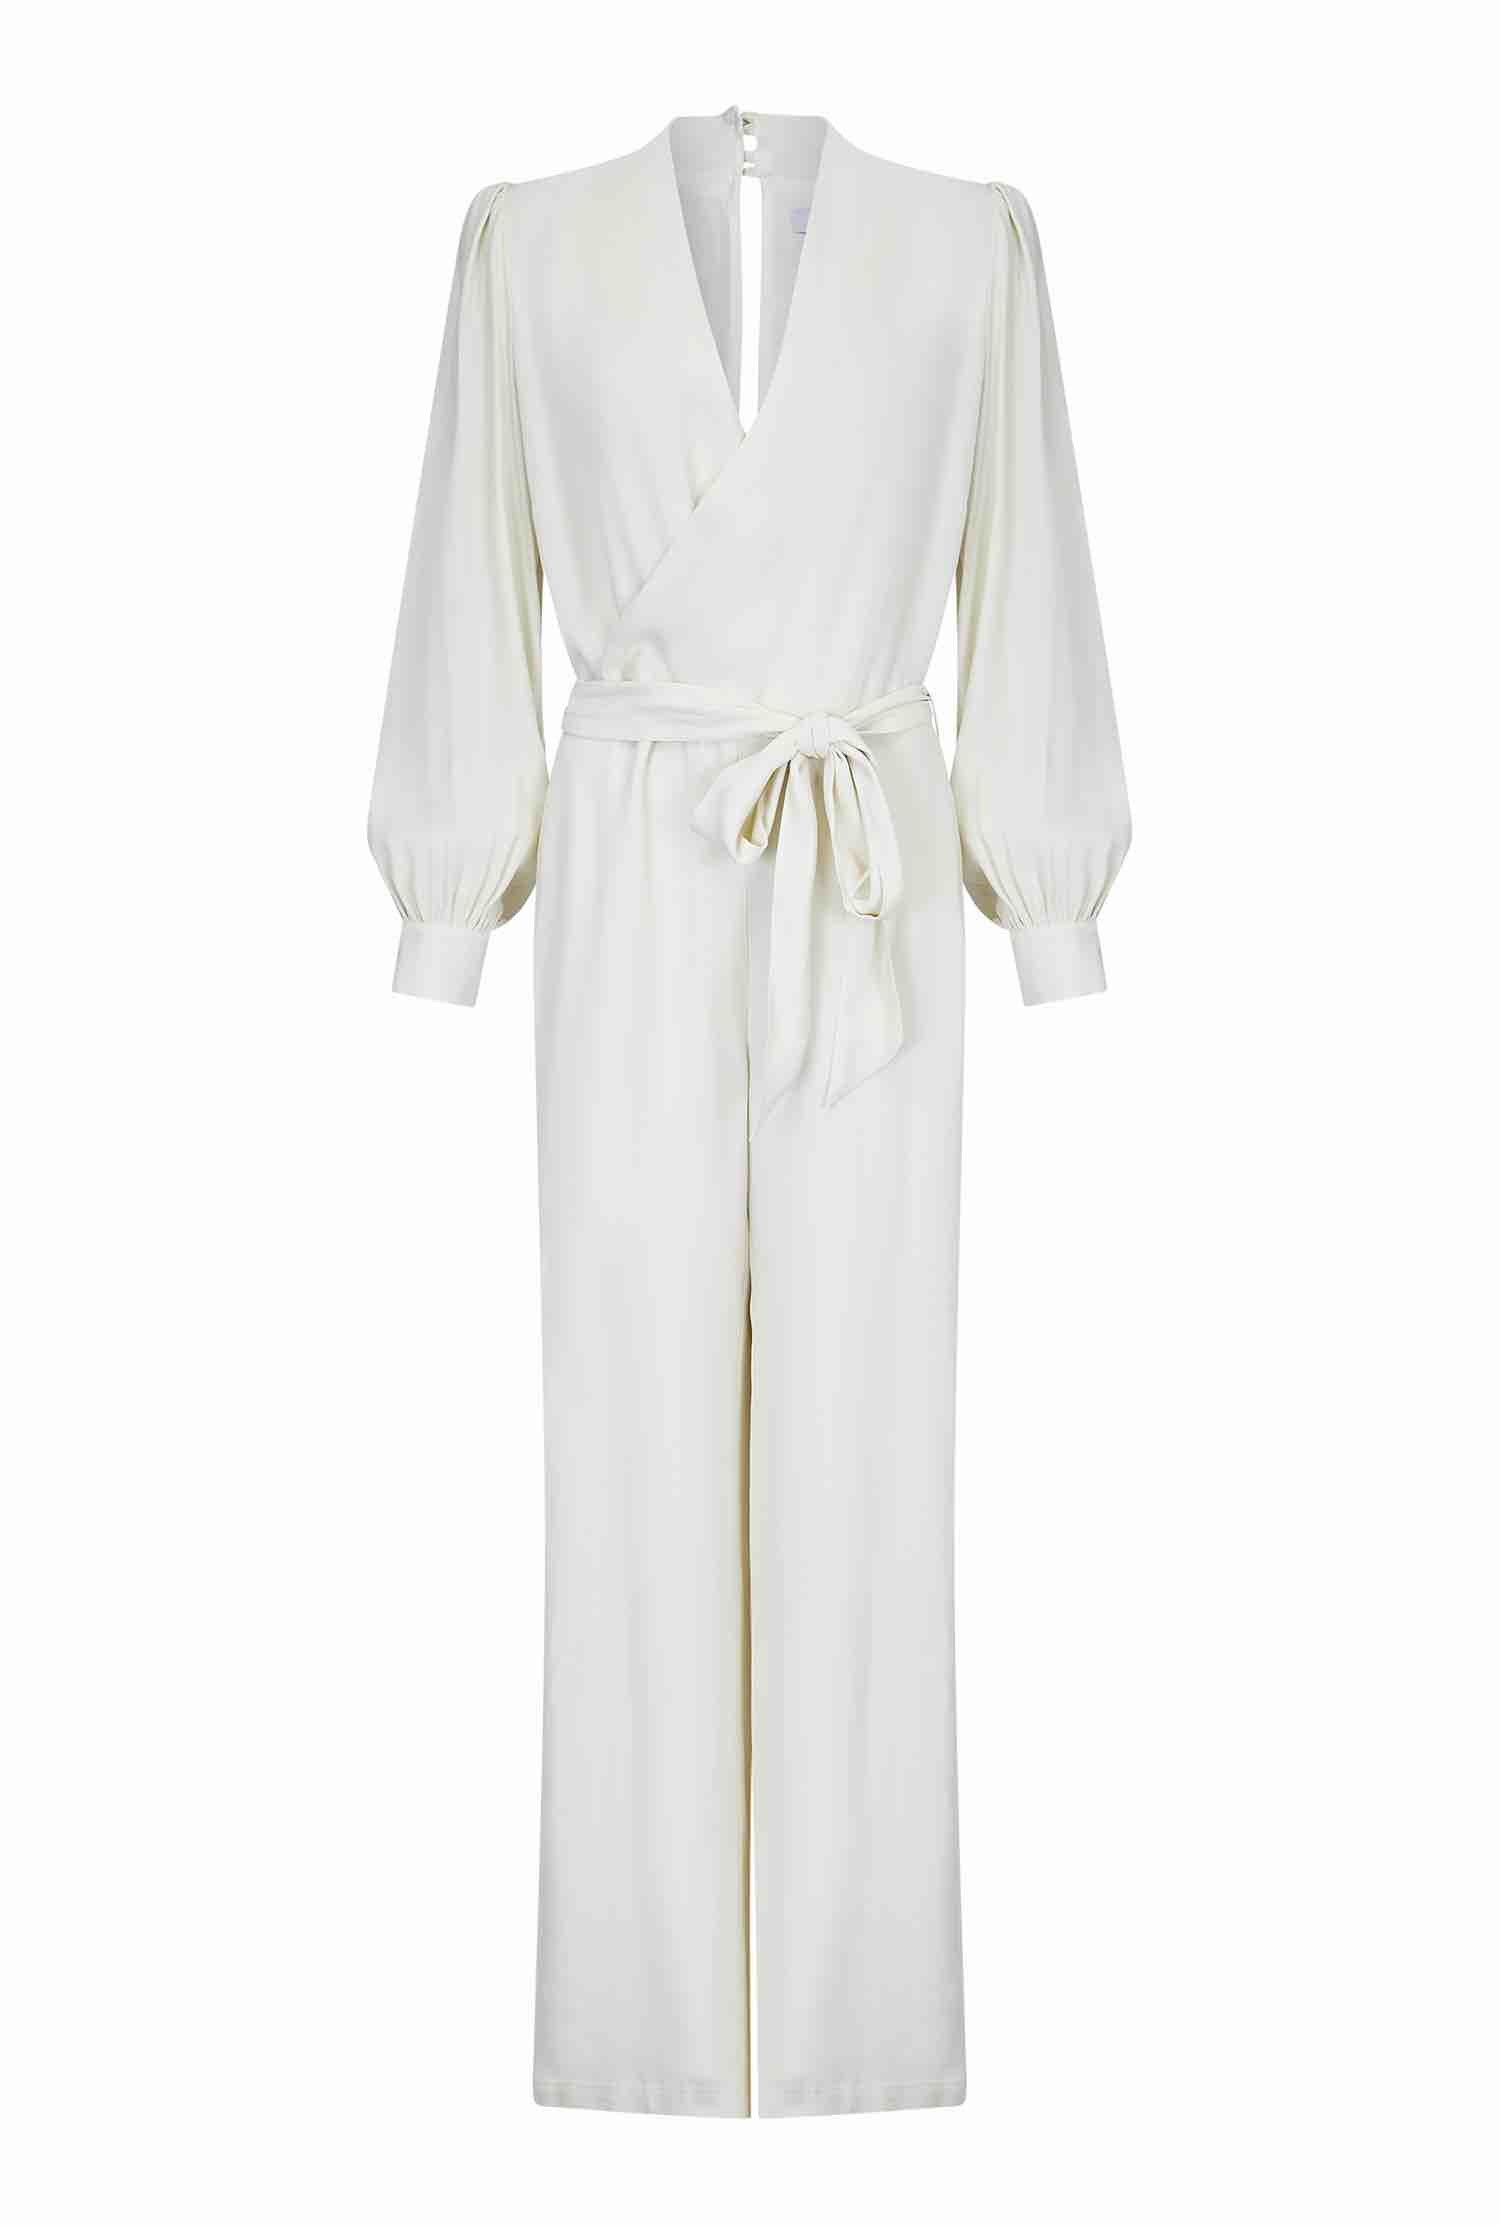 Olive Ivory Satin Back Crepe Wedding Jumpsuit | Ghost.co.uk